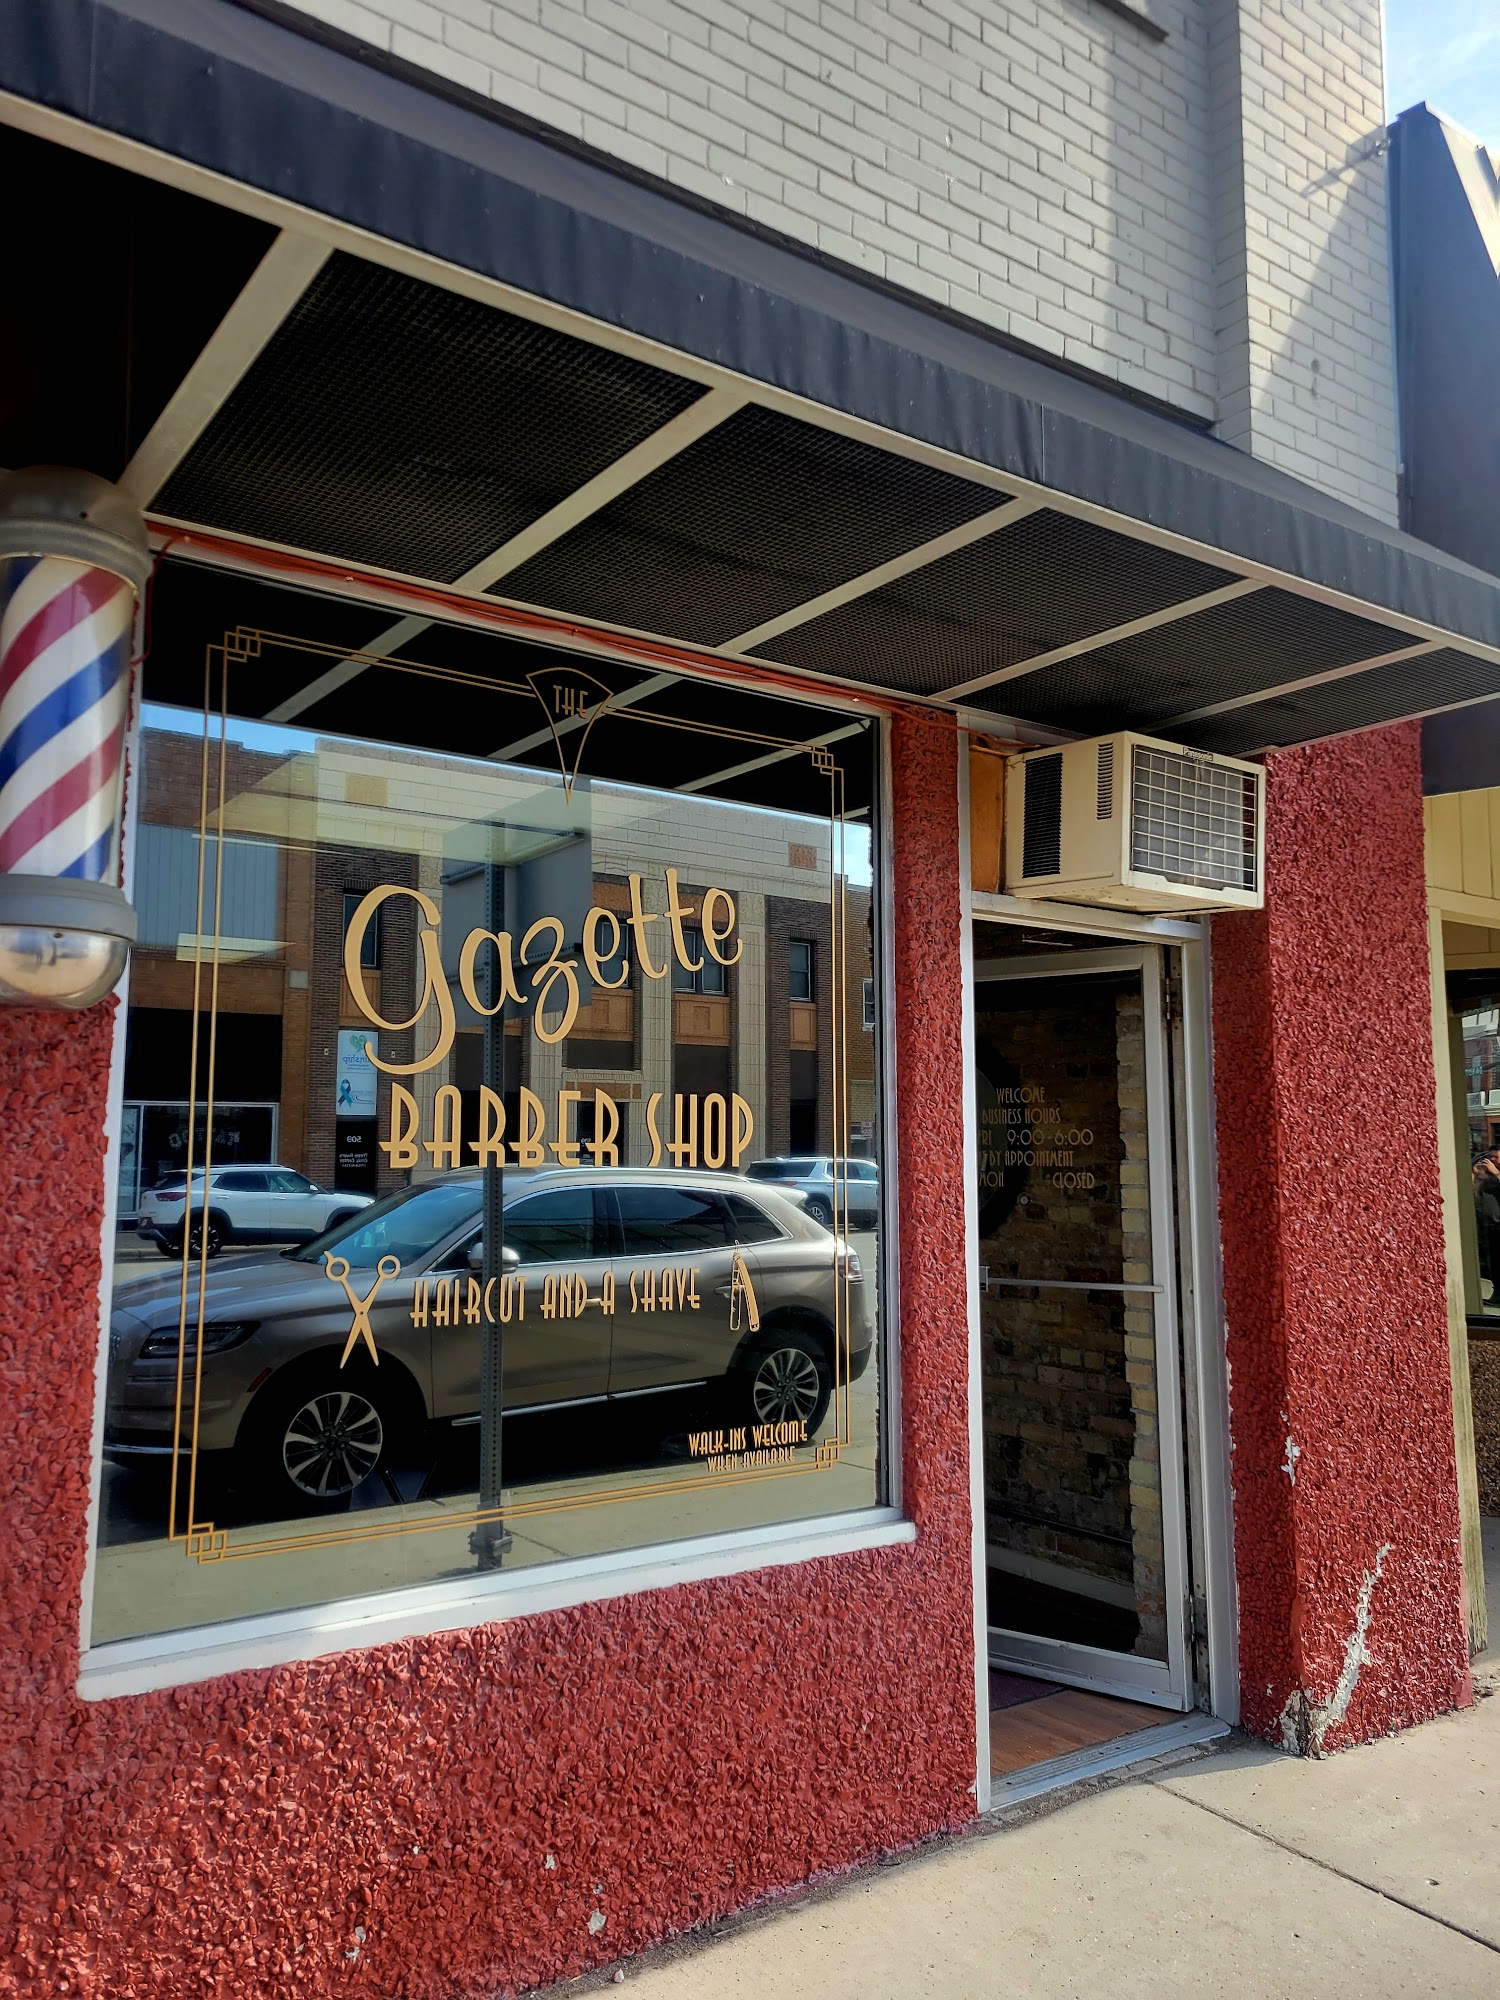 The Gazette Barber Shop 516 Dakota Ave, Wahpeton North Dakota 58075